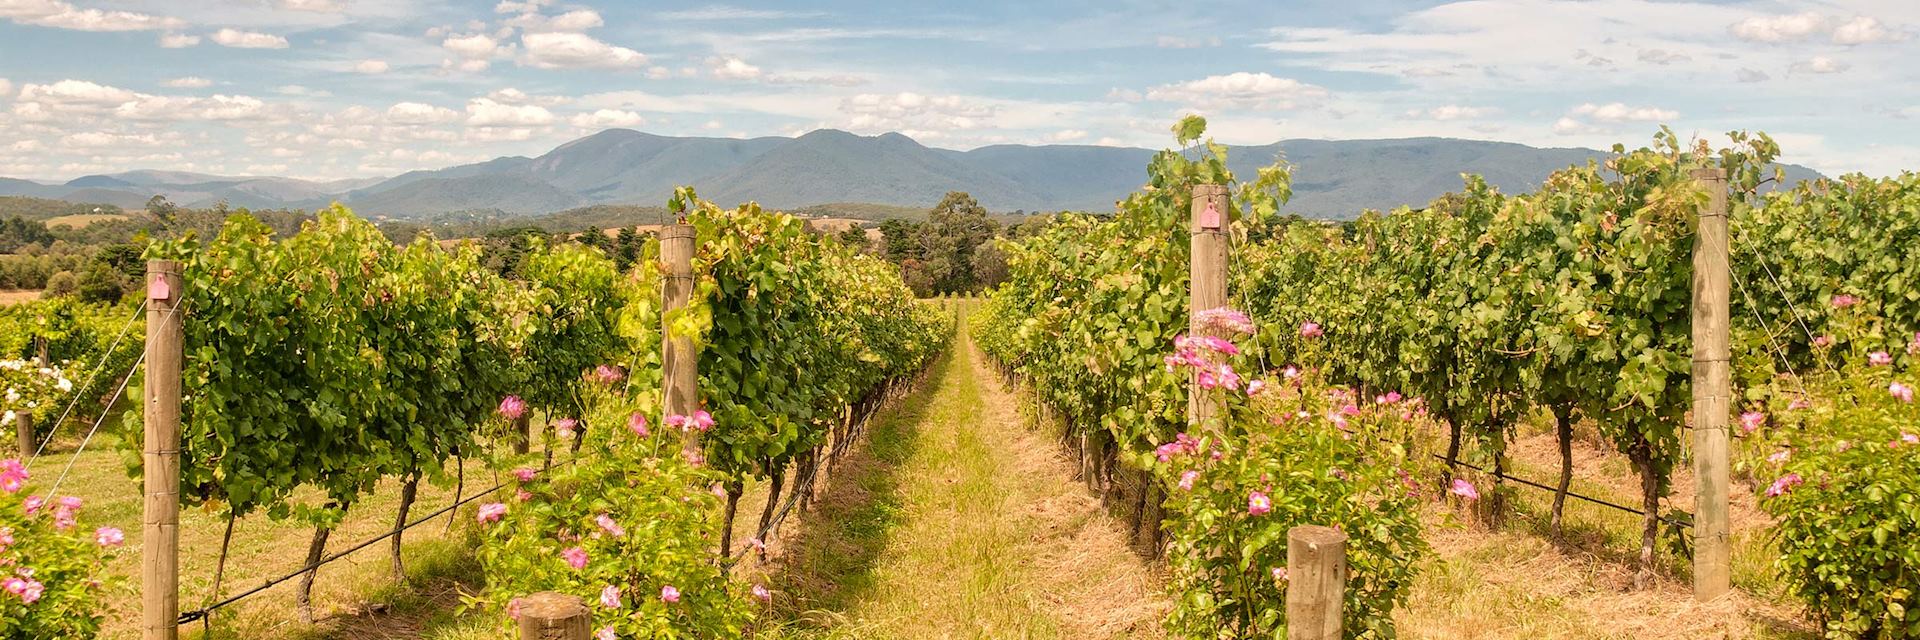 Yarra Valley vineyard